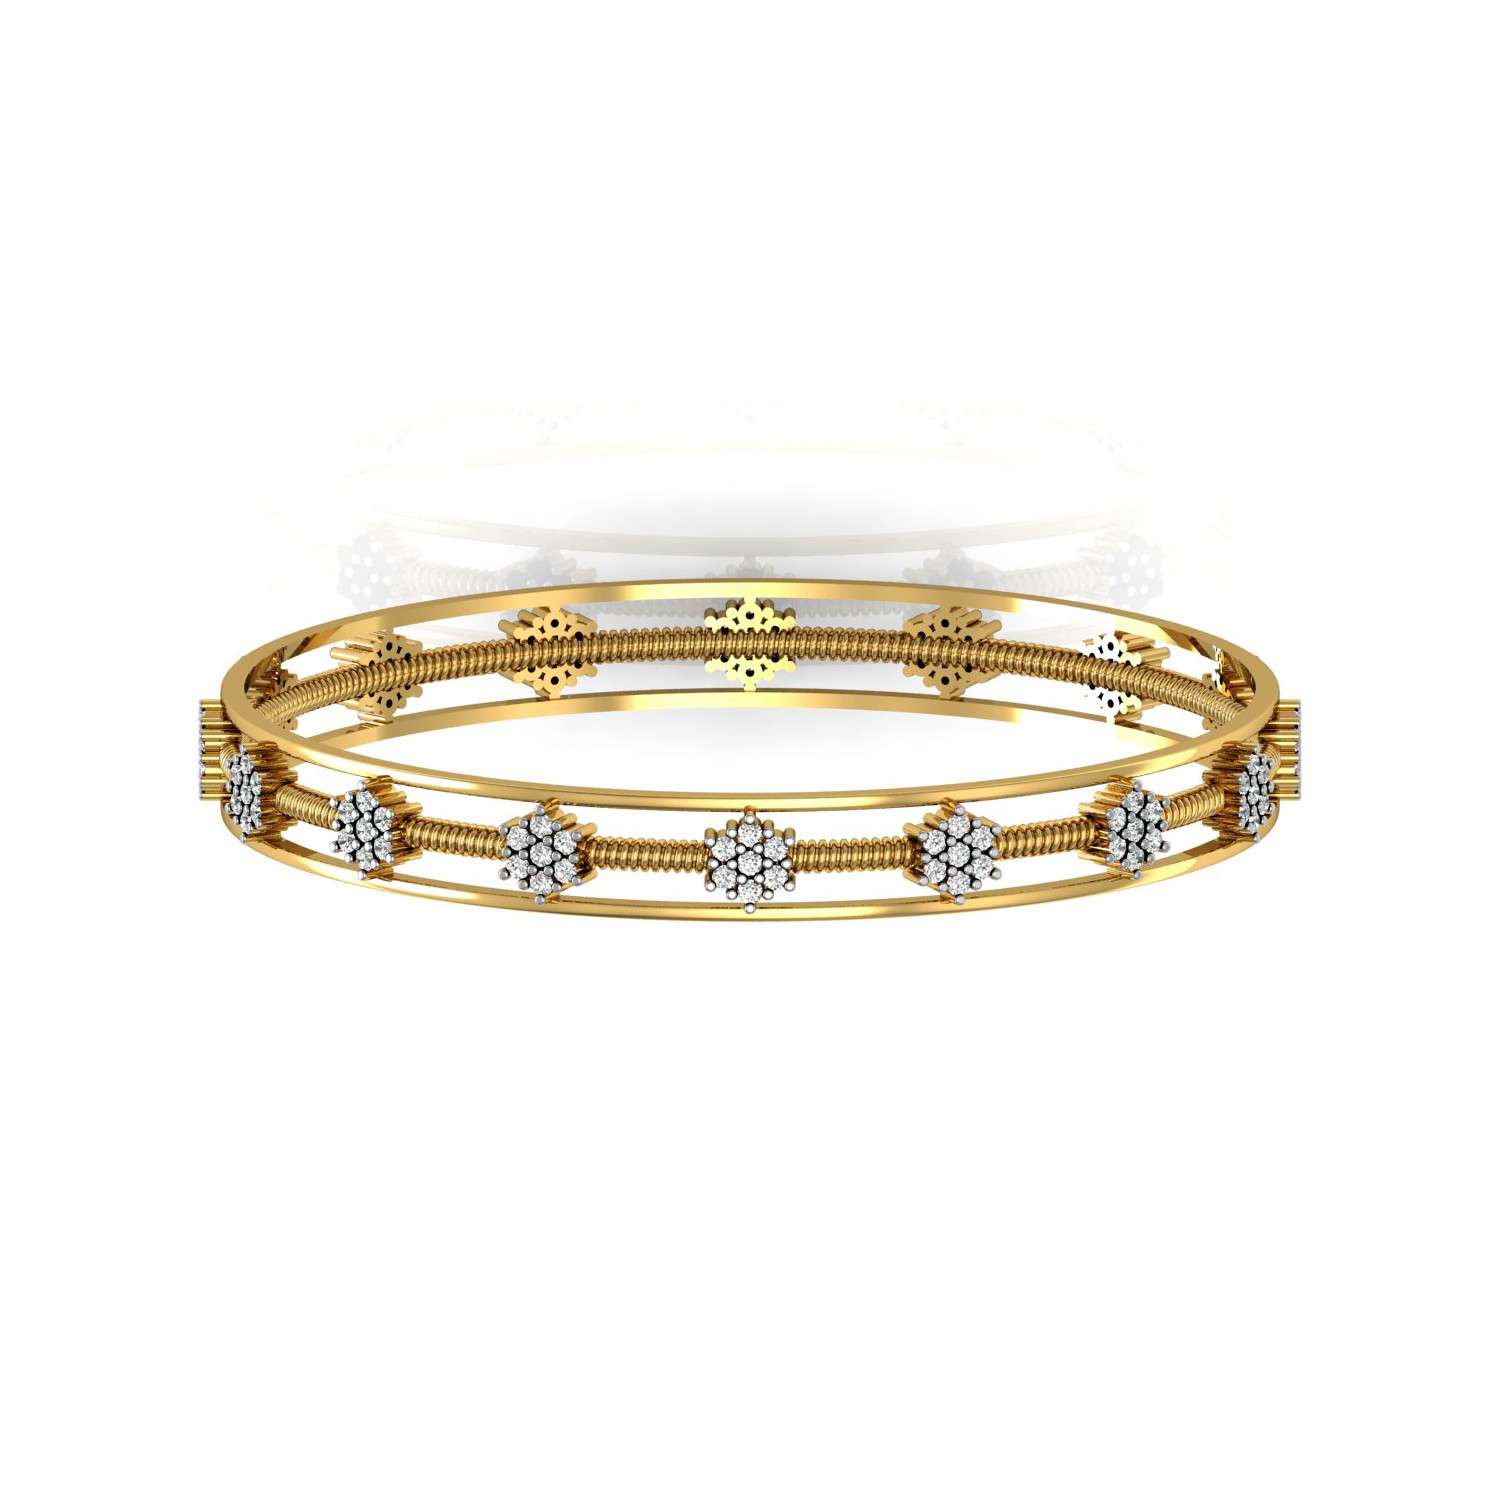 Genuine diamond solid gold bangle bracelet